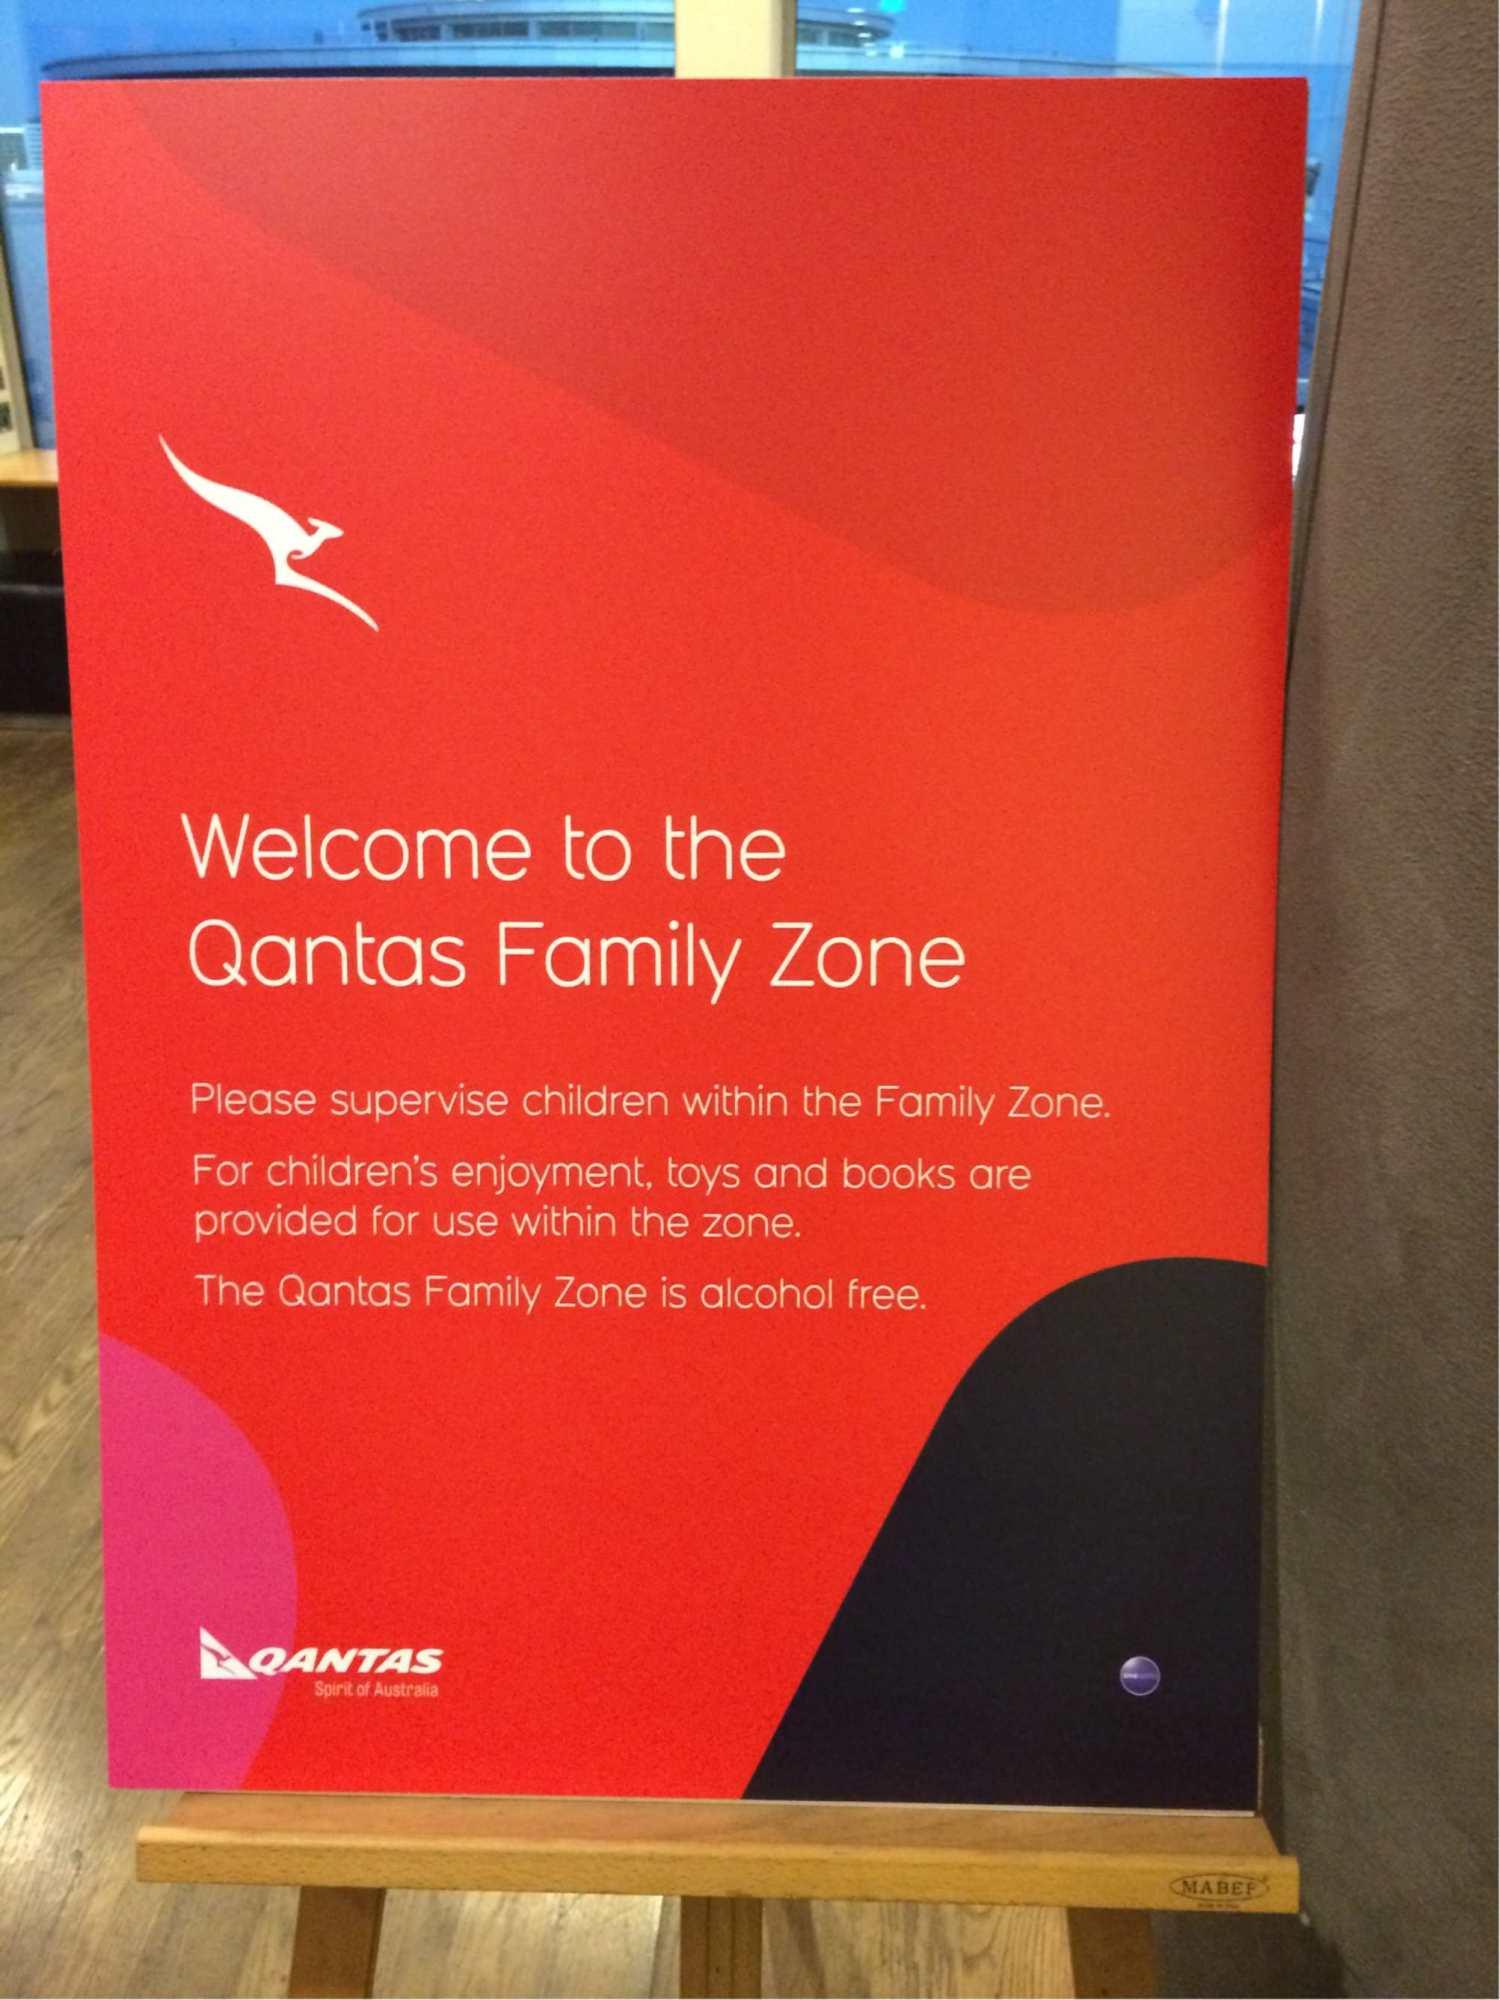 Qantas Airways The Qantas Club image 17 of 20